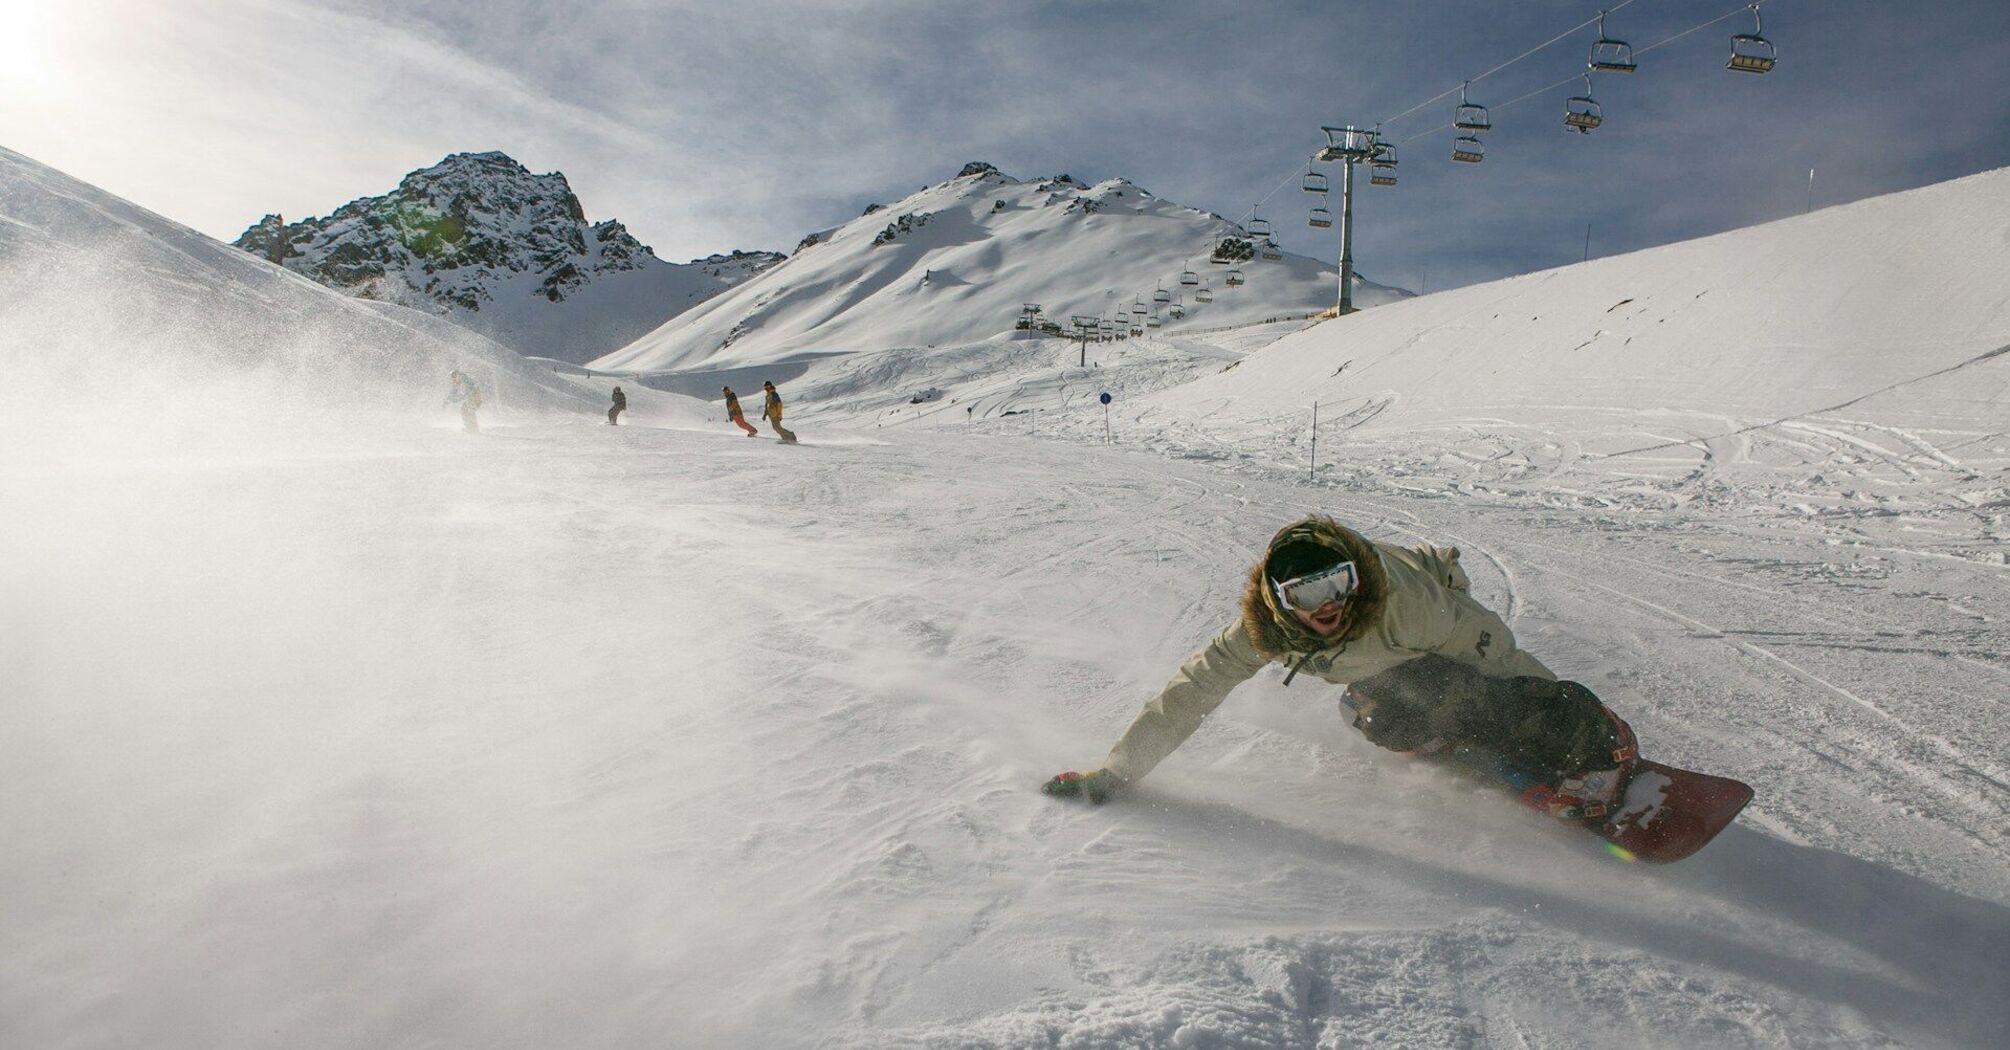 Snowboarder descends down the ski slope, Kazakhstan